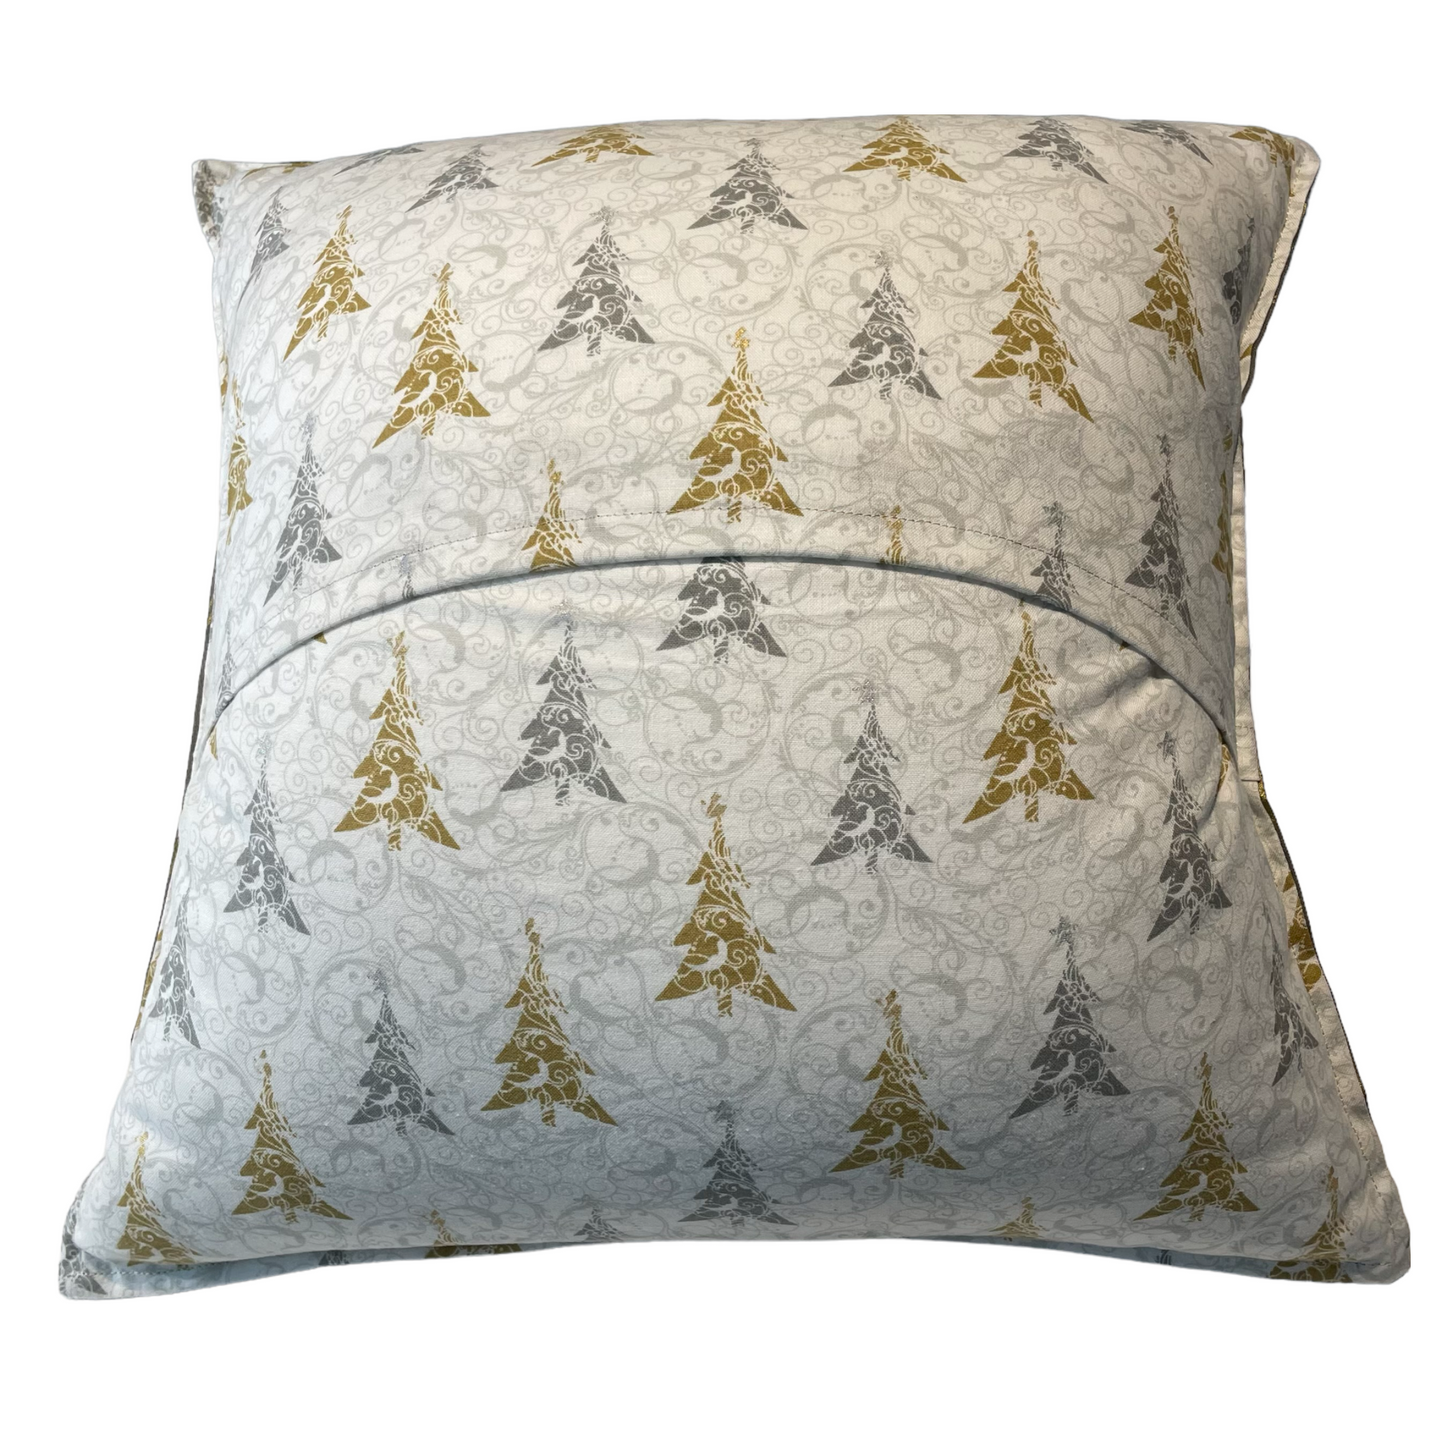 Christmas Pillow Shams, Insert Sold Separately - Home Stitchery Decor